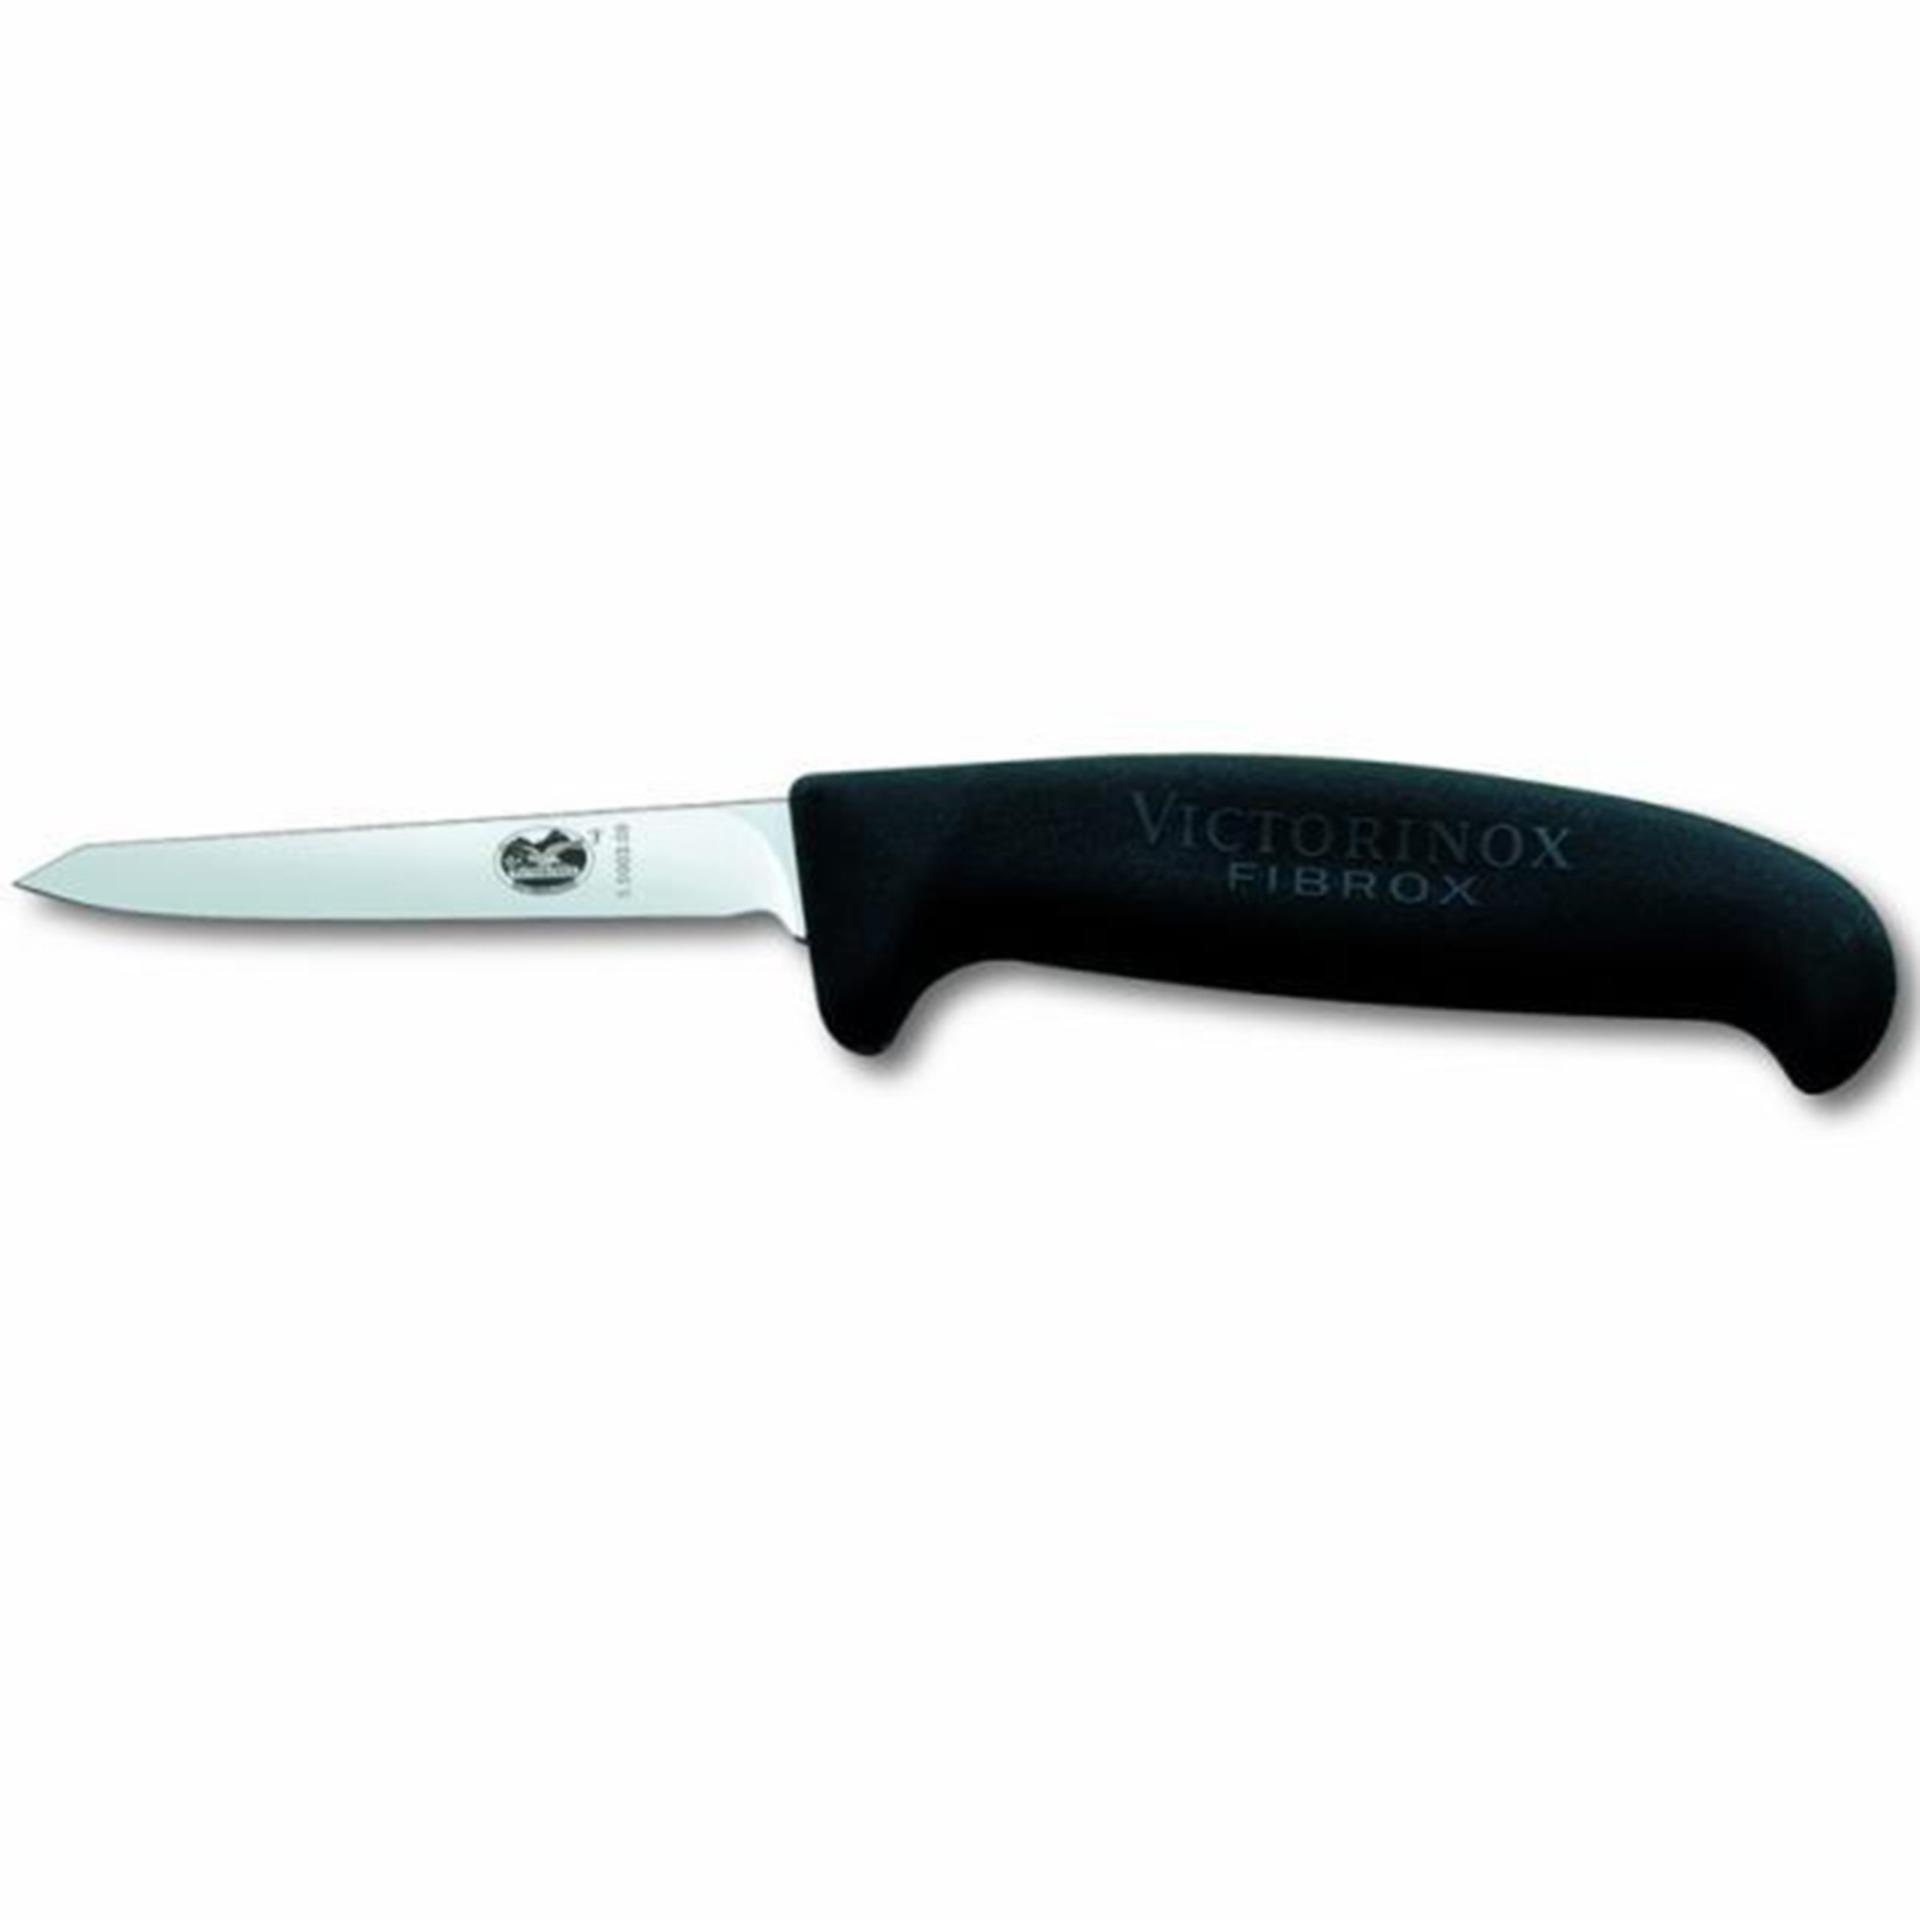 Poultry Knife Black Fibrox 8 Cm - Black